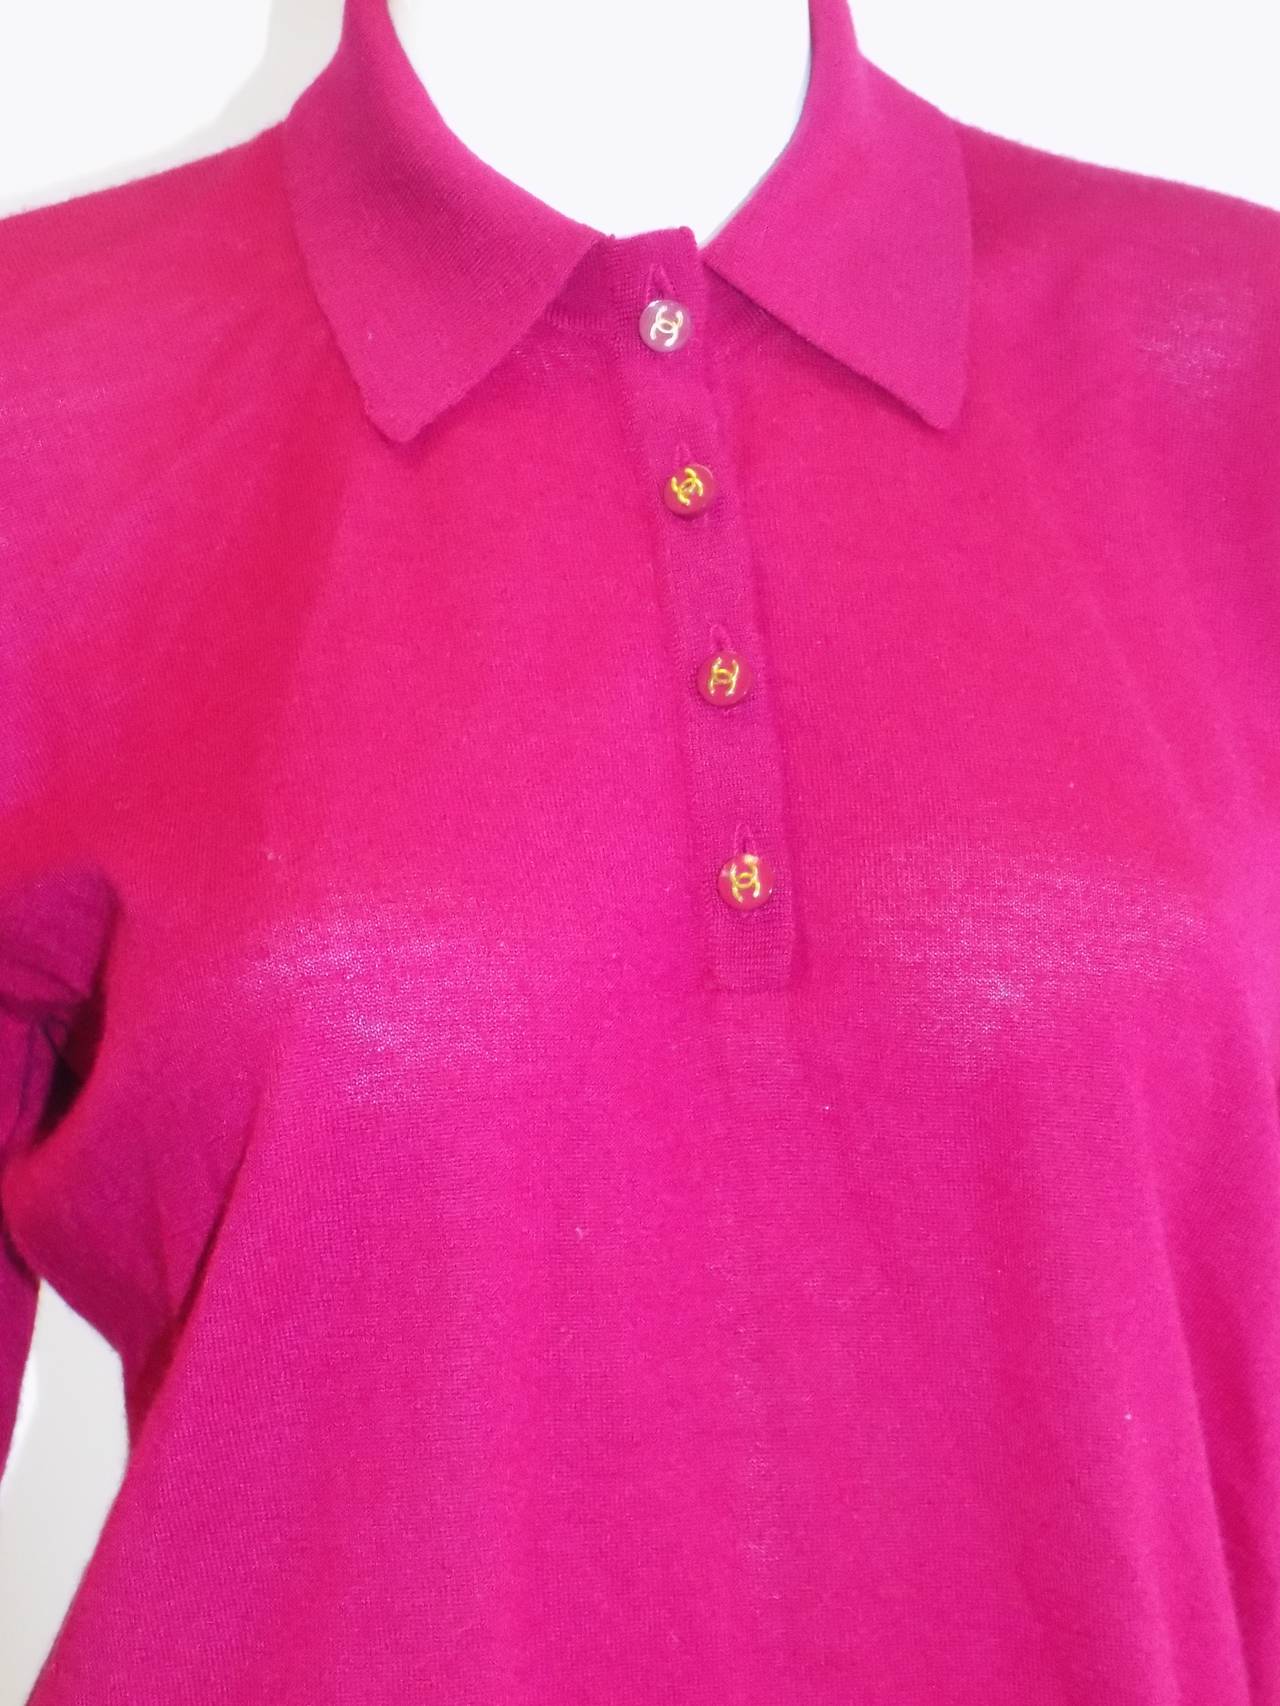 Women's Chanel Vintage  cerise pink  cashmere button front  sweater top